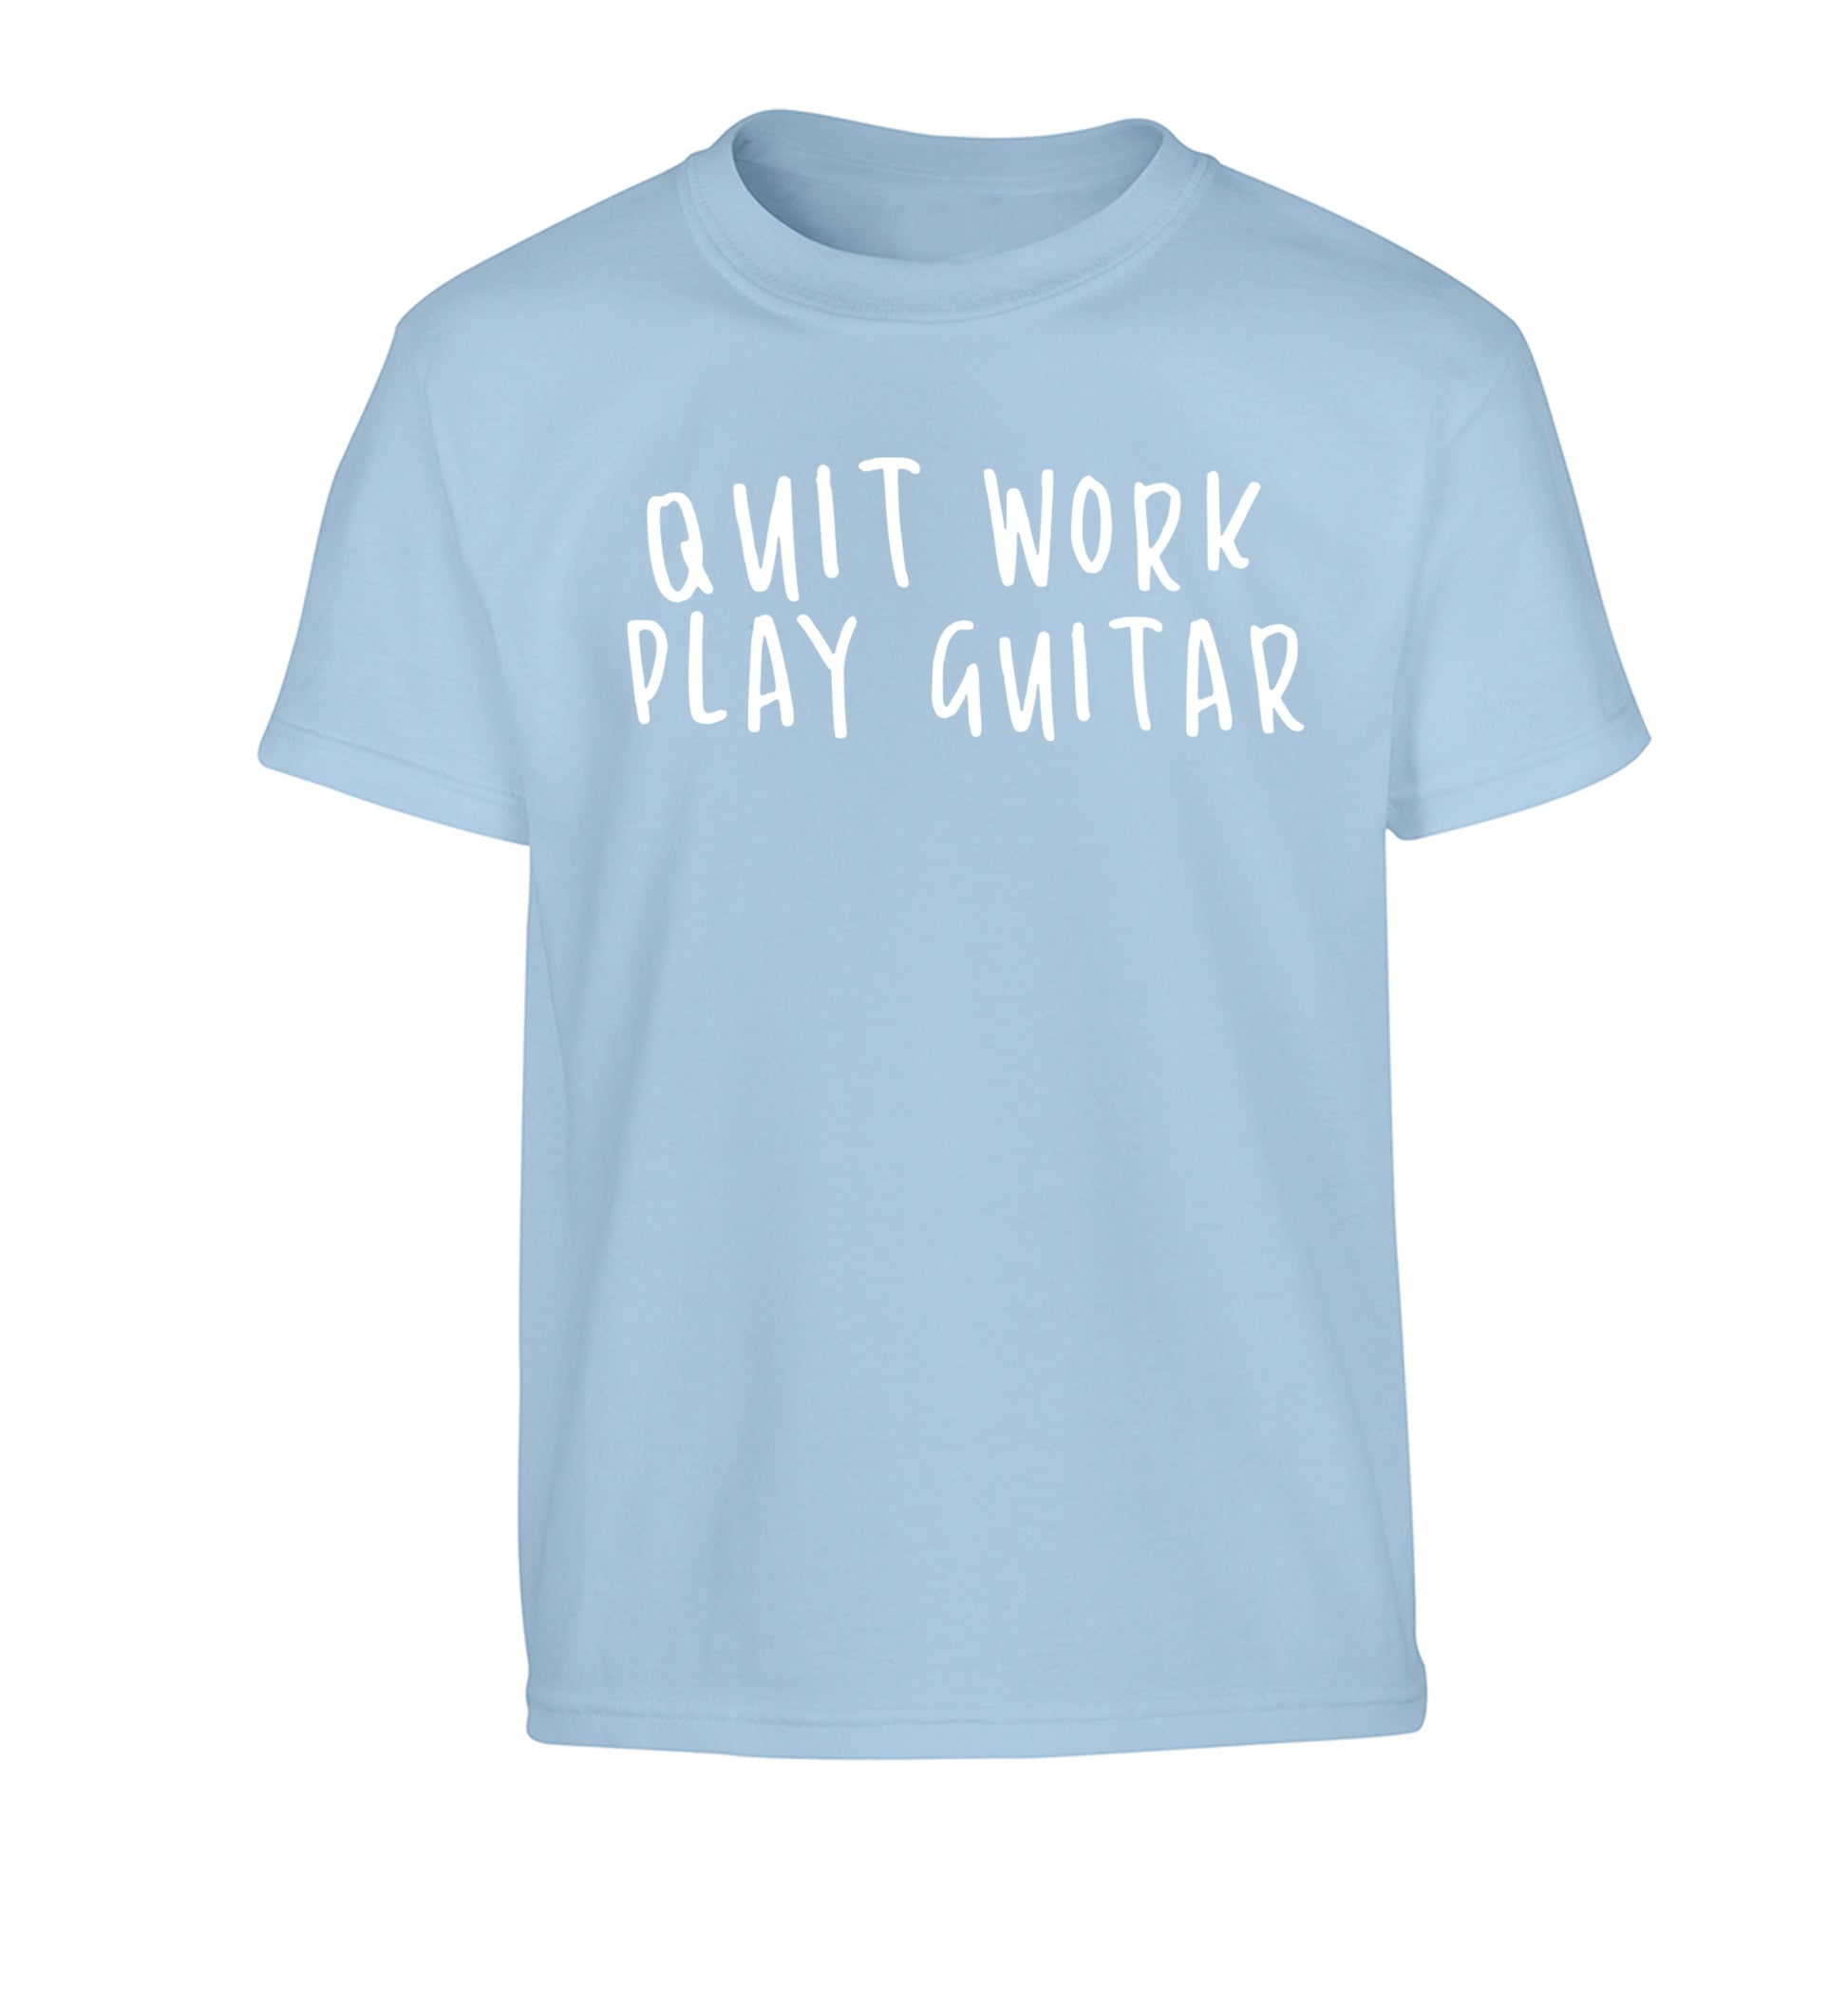 Quit work play guitar Children's light blue Tshirt 12-14 Years